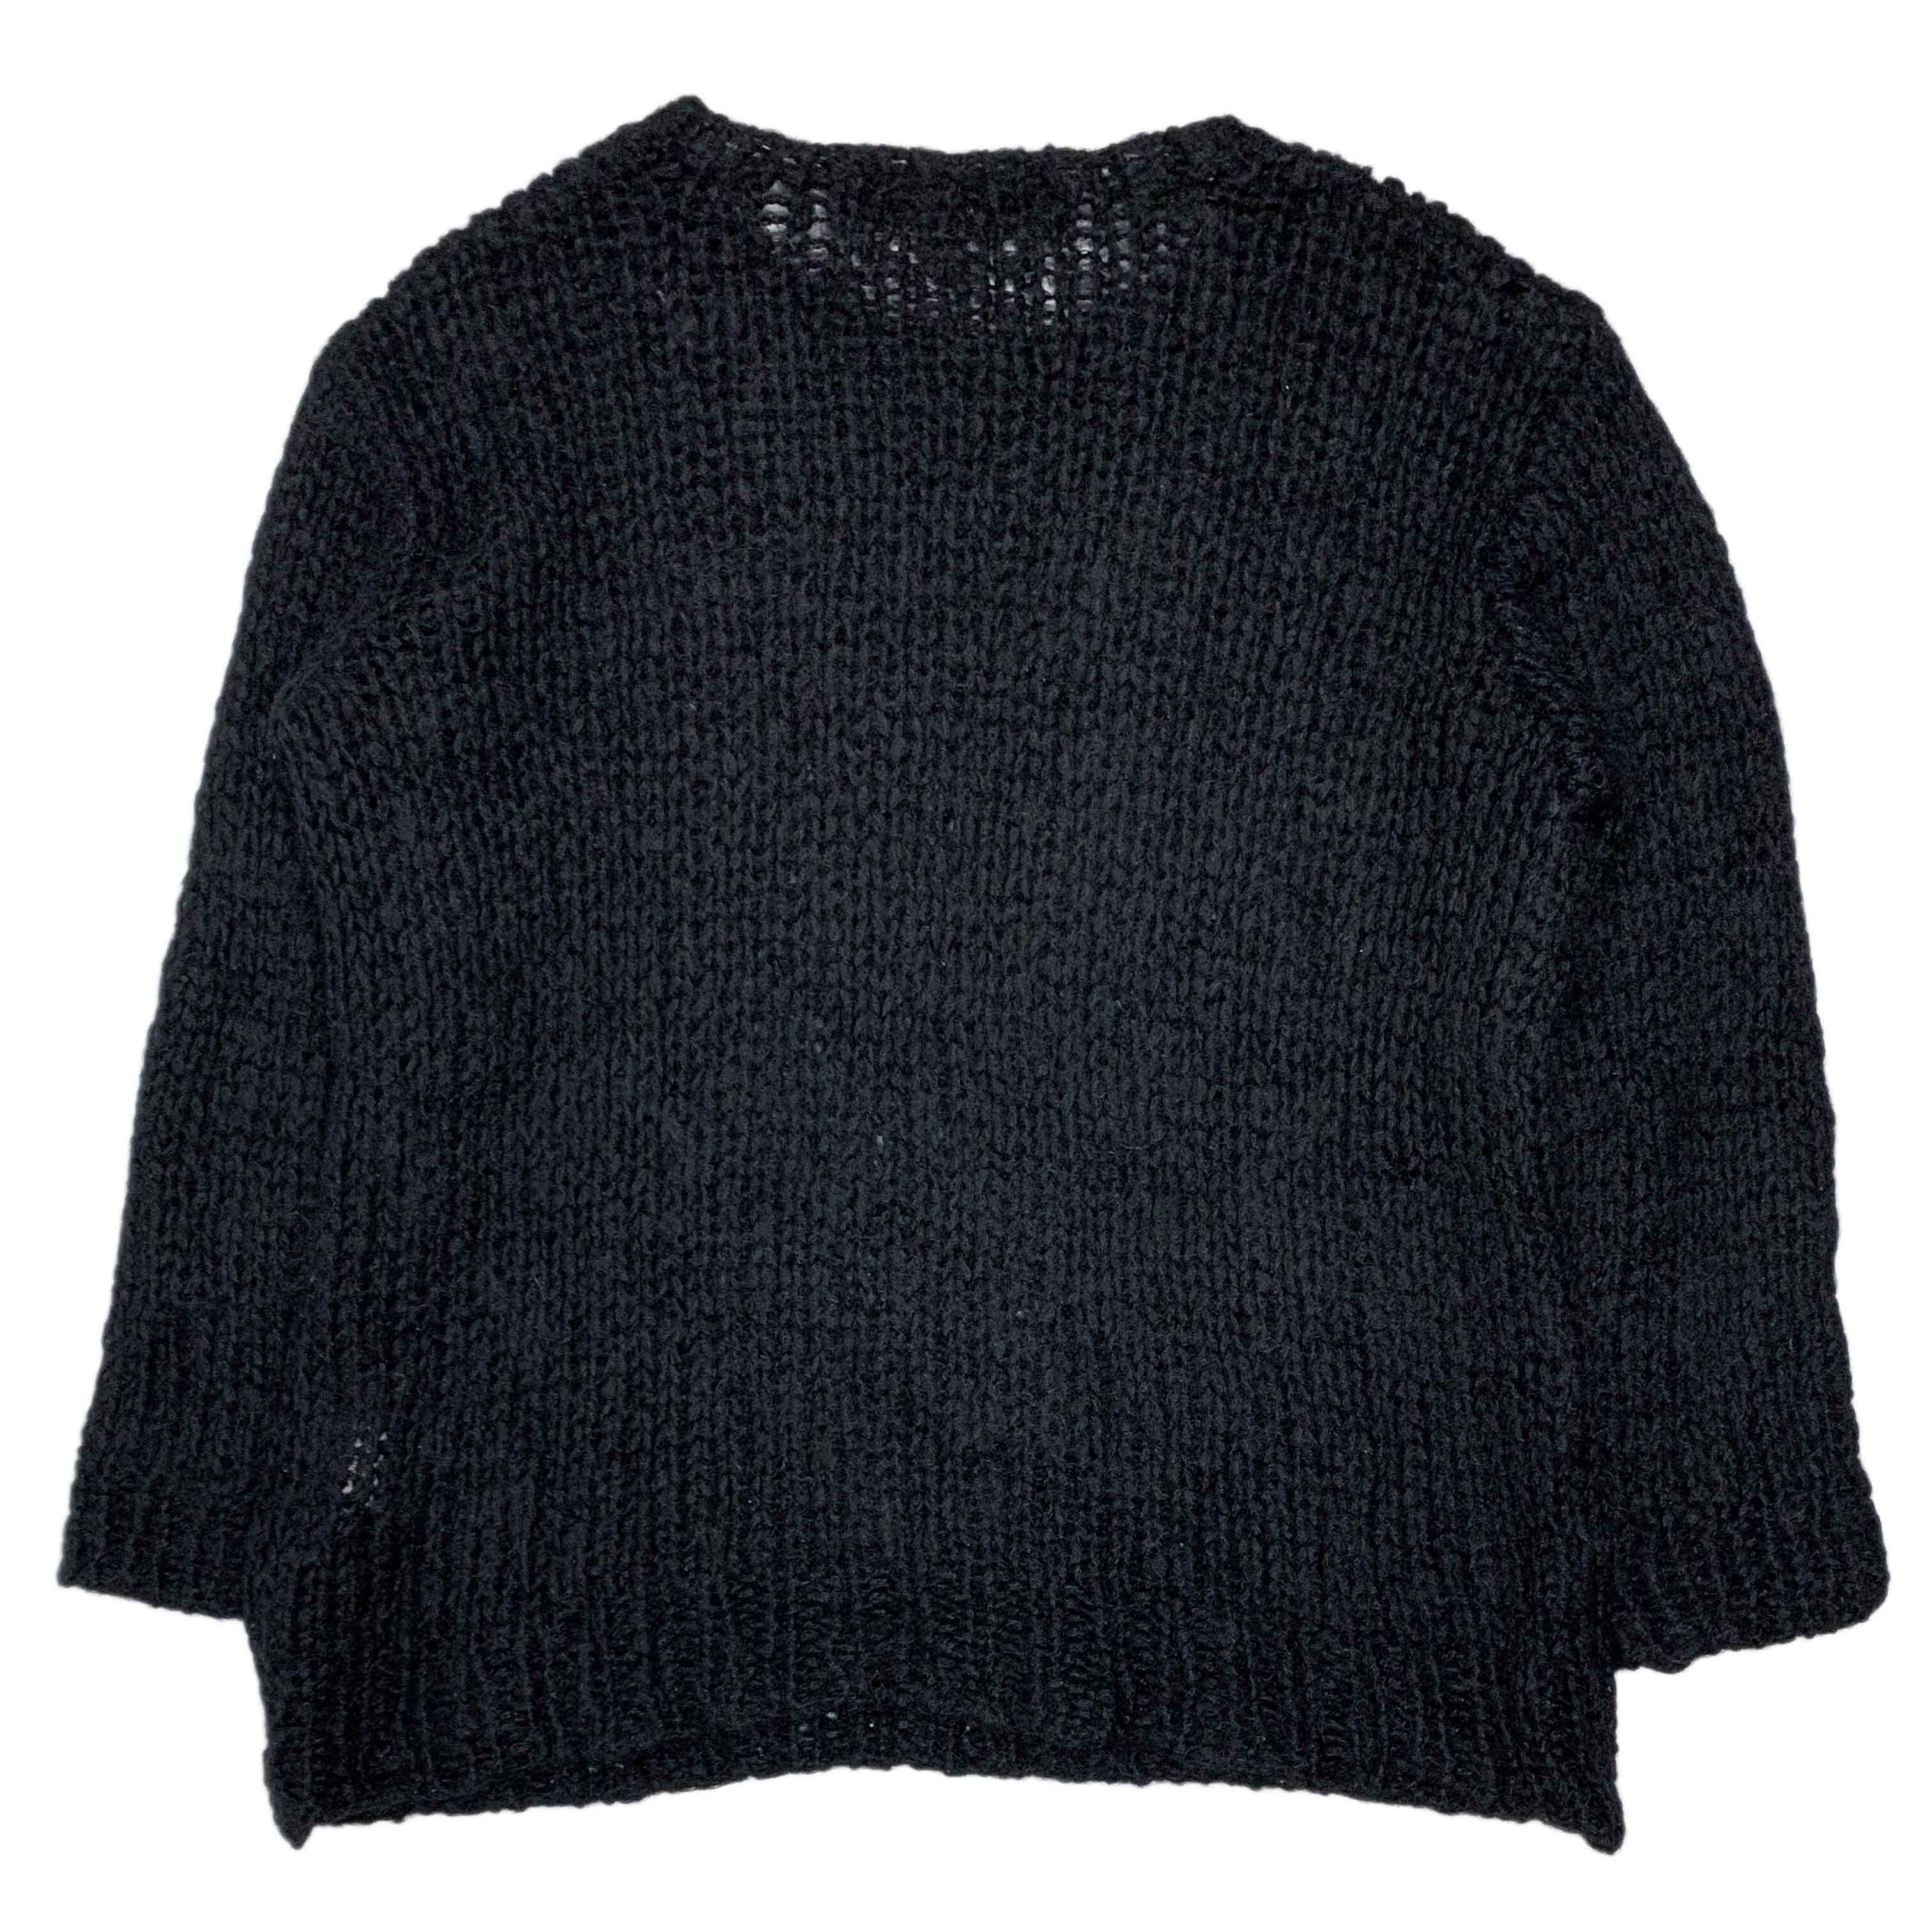 AW91 Mesh Knit Wool Sweater - 2